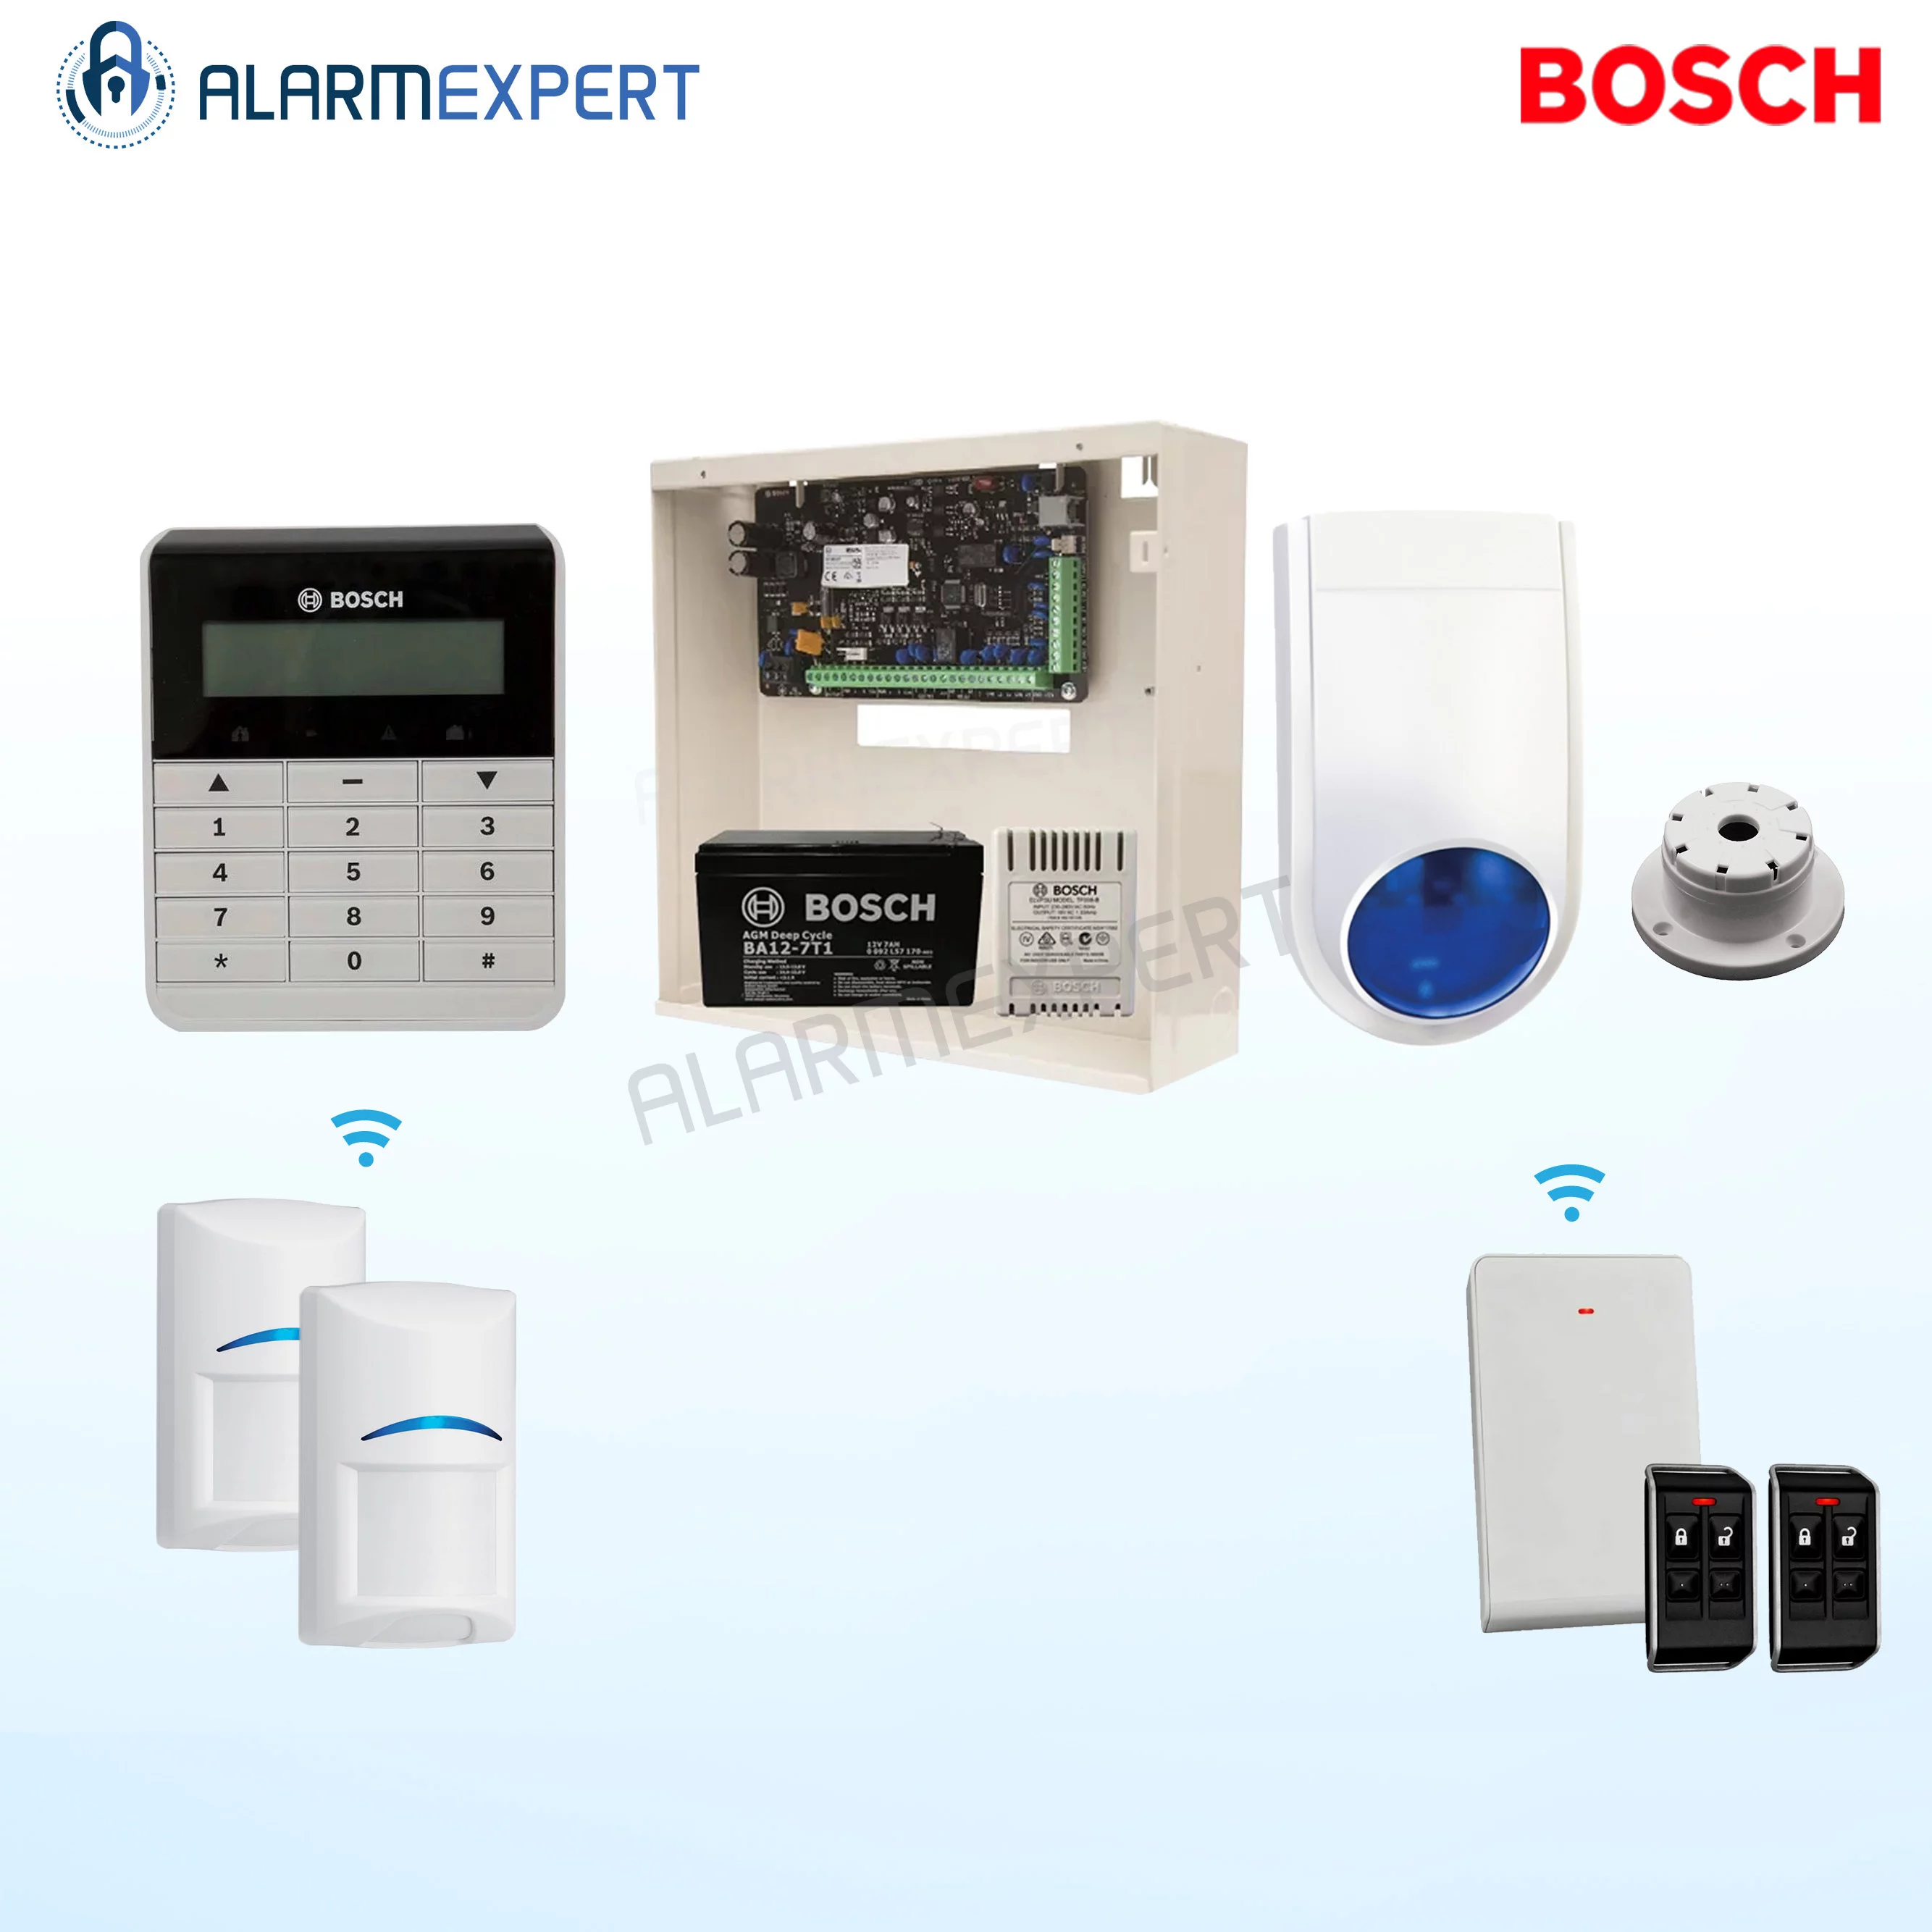 Bosch Solution 3000 + 2 Wireless PIRs + Text Keypad + Wireless Receiver + 2 Deluxe Remotes